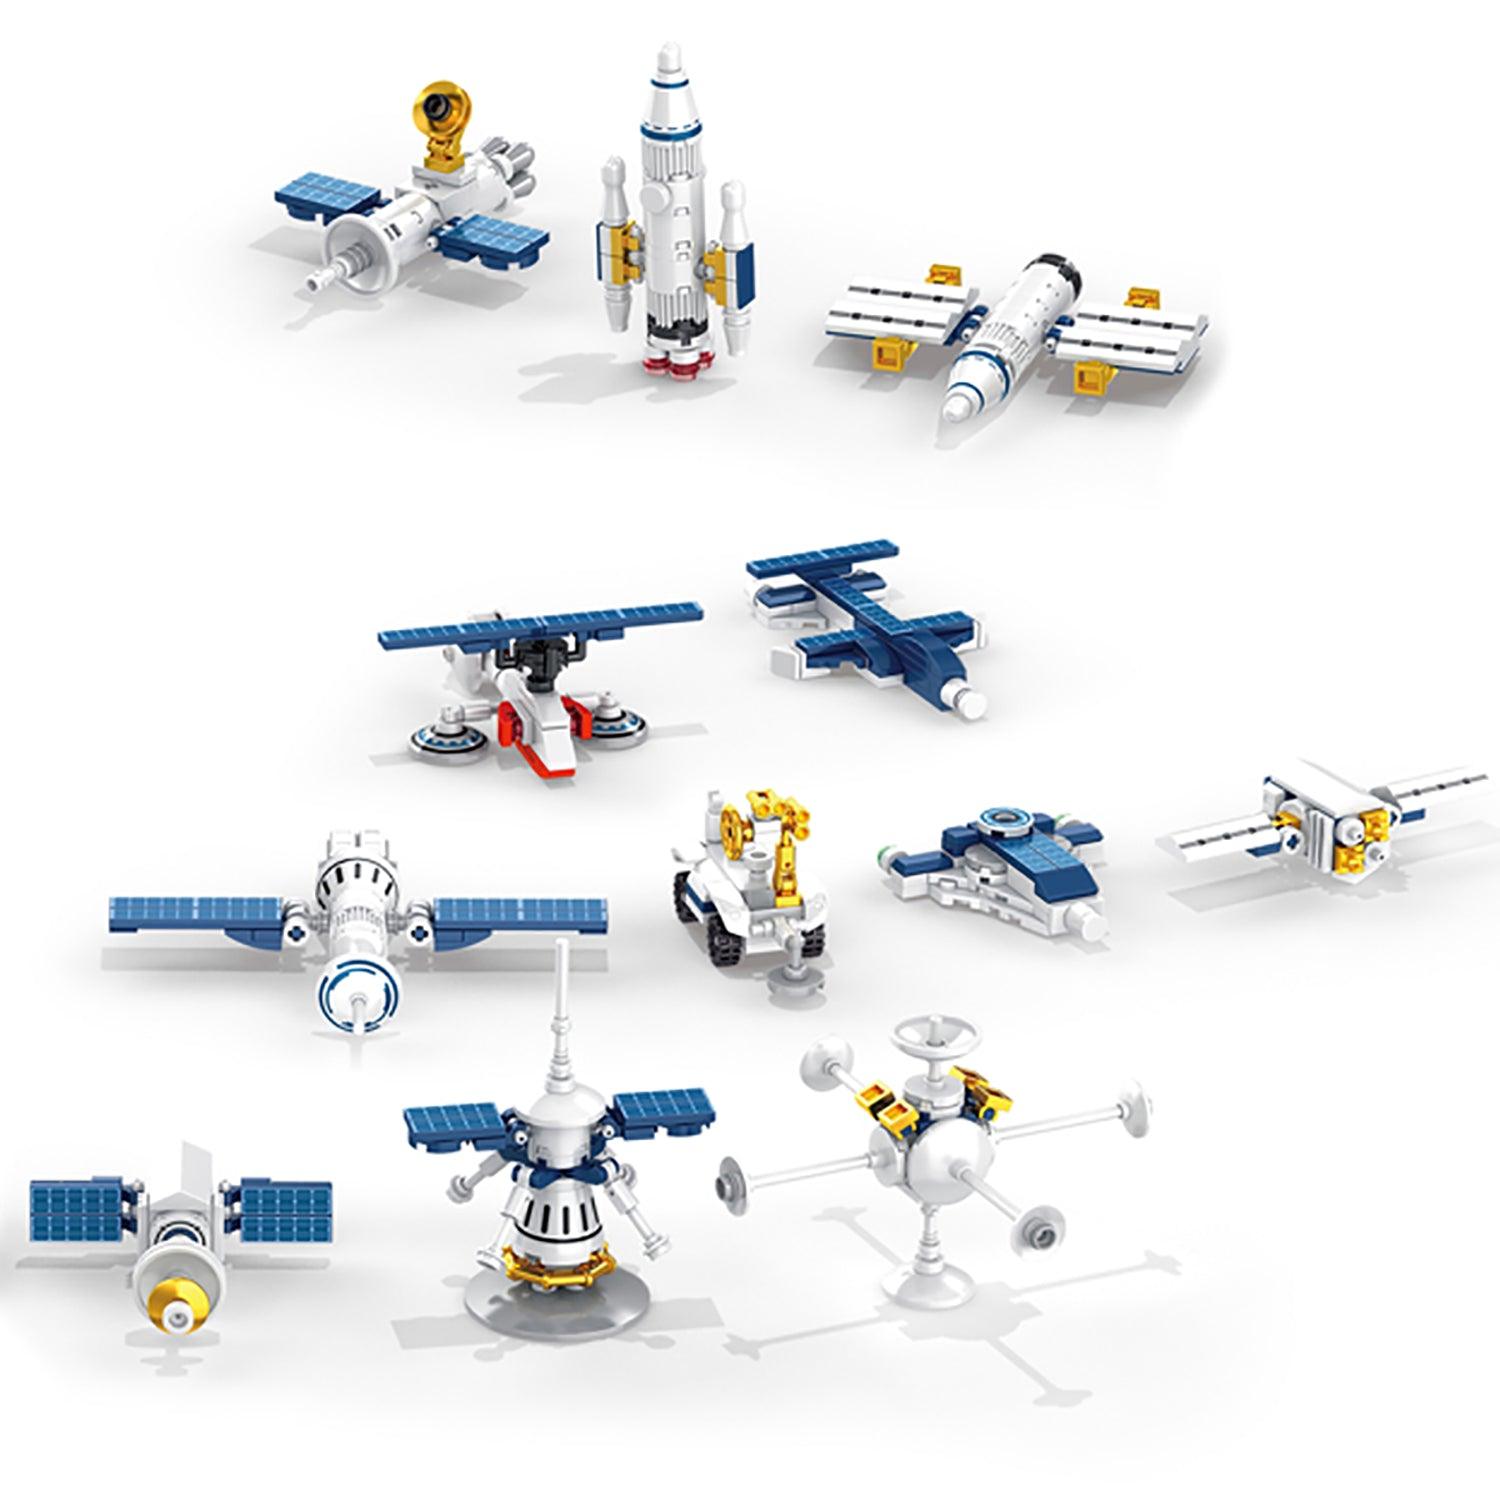 BK07 Aerospace Series Space Station Building Block Set, 573 Pieces - Loomini